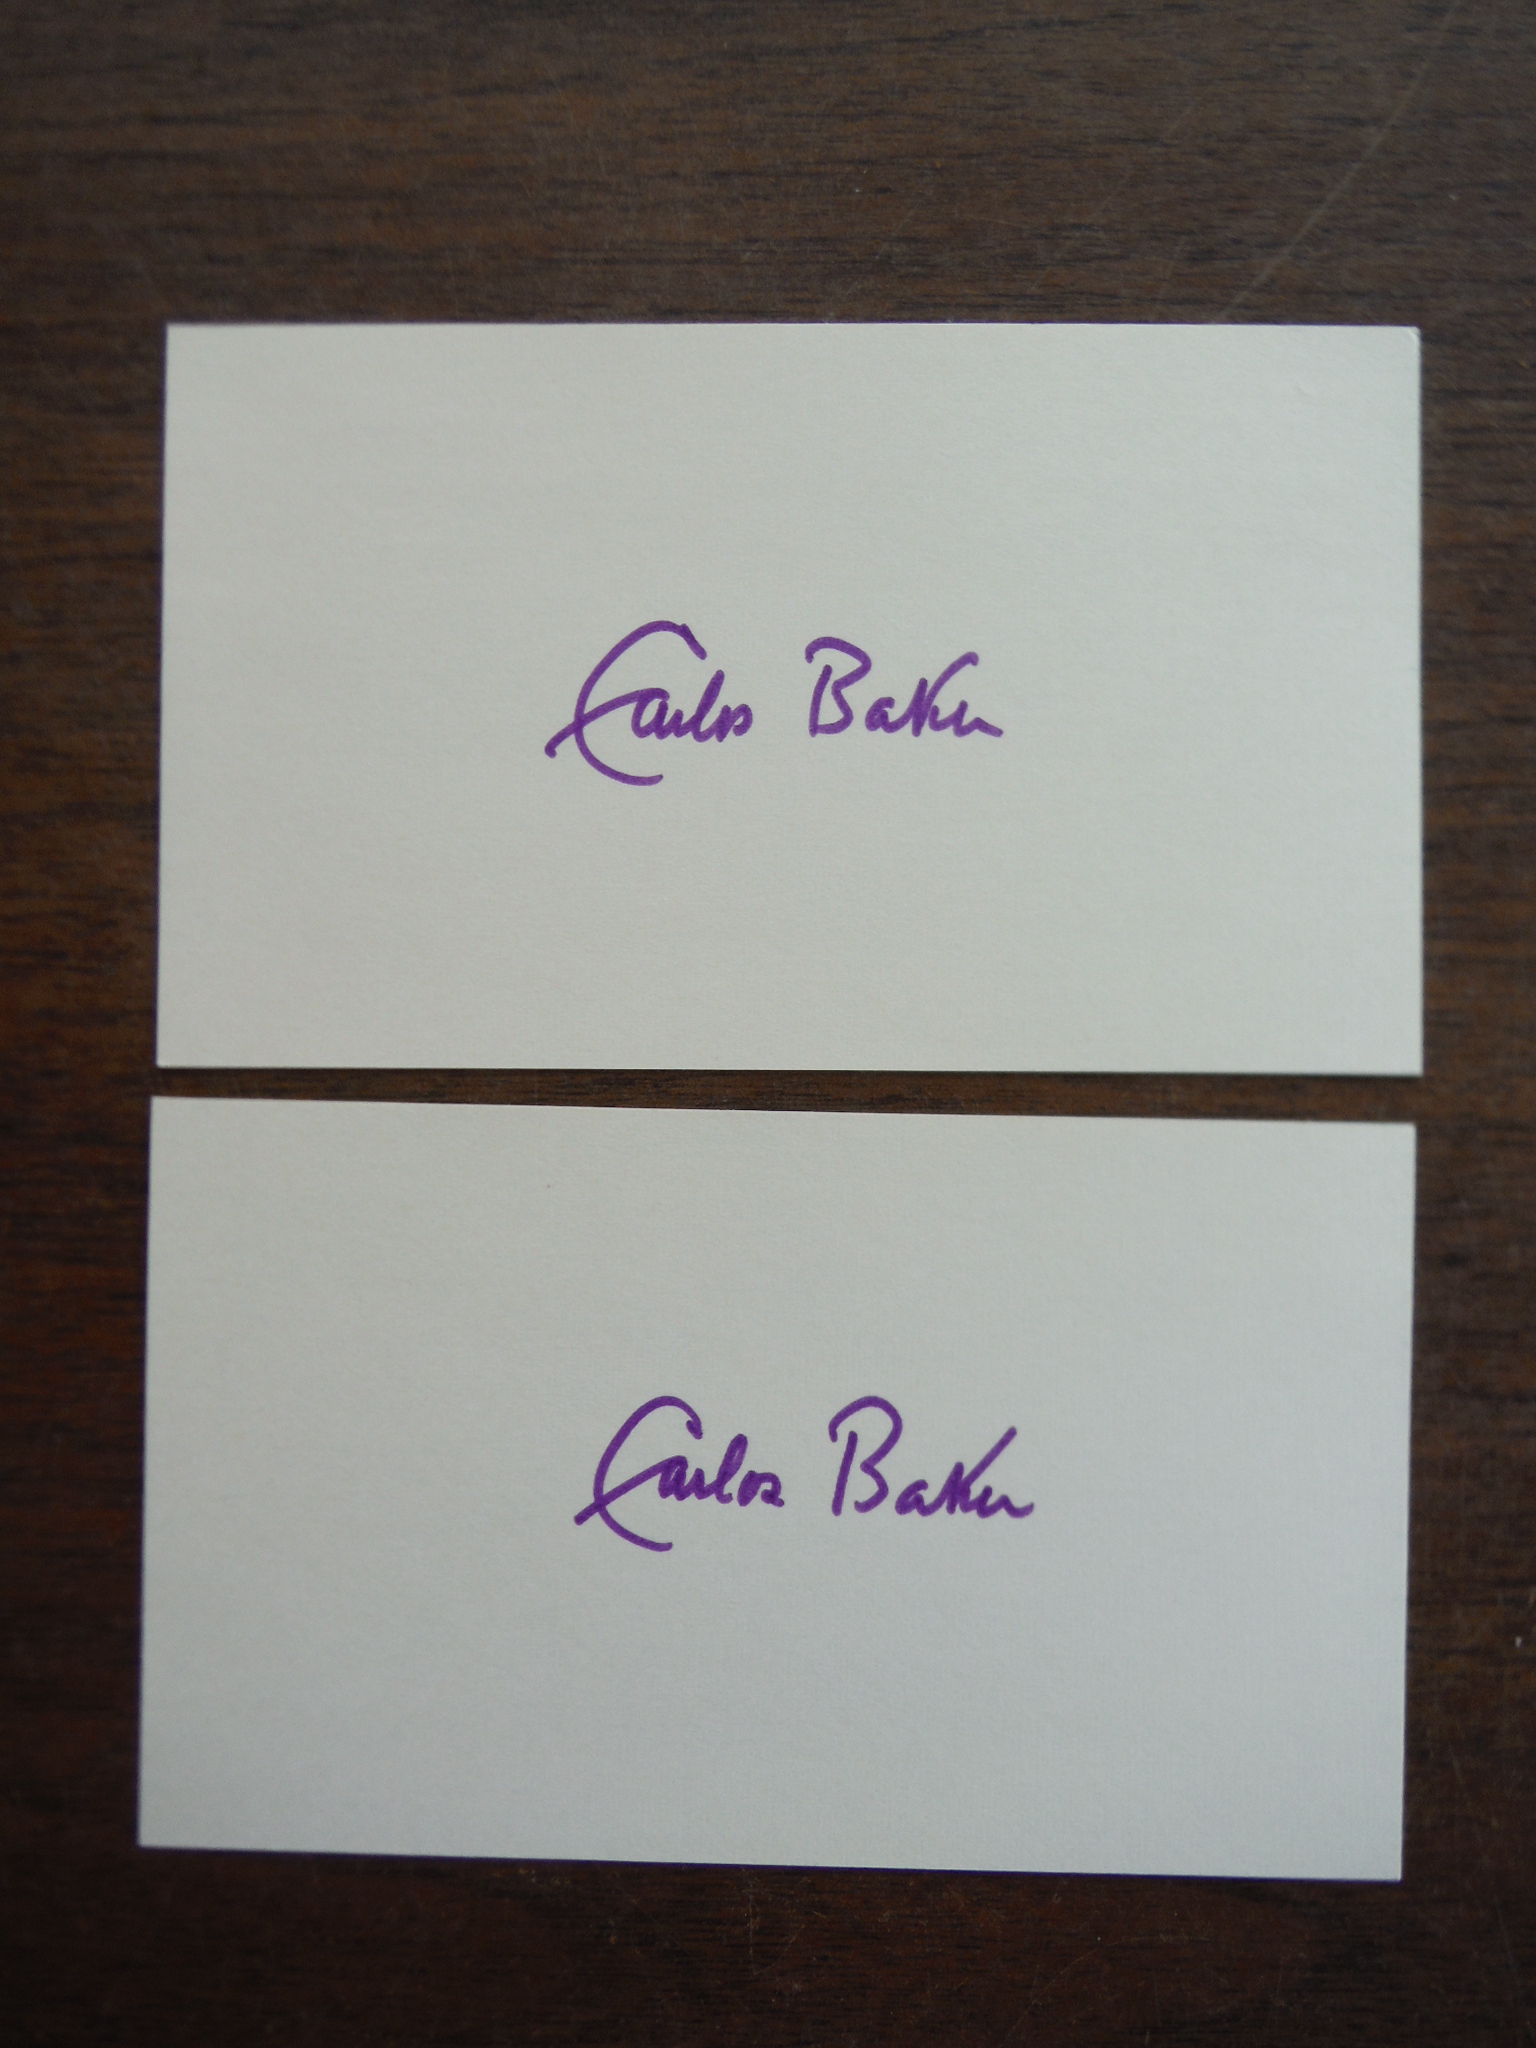 2 Autographs of  Carlos Baker.